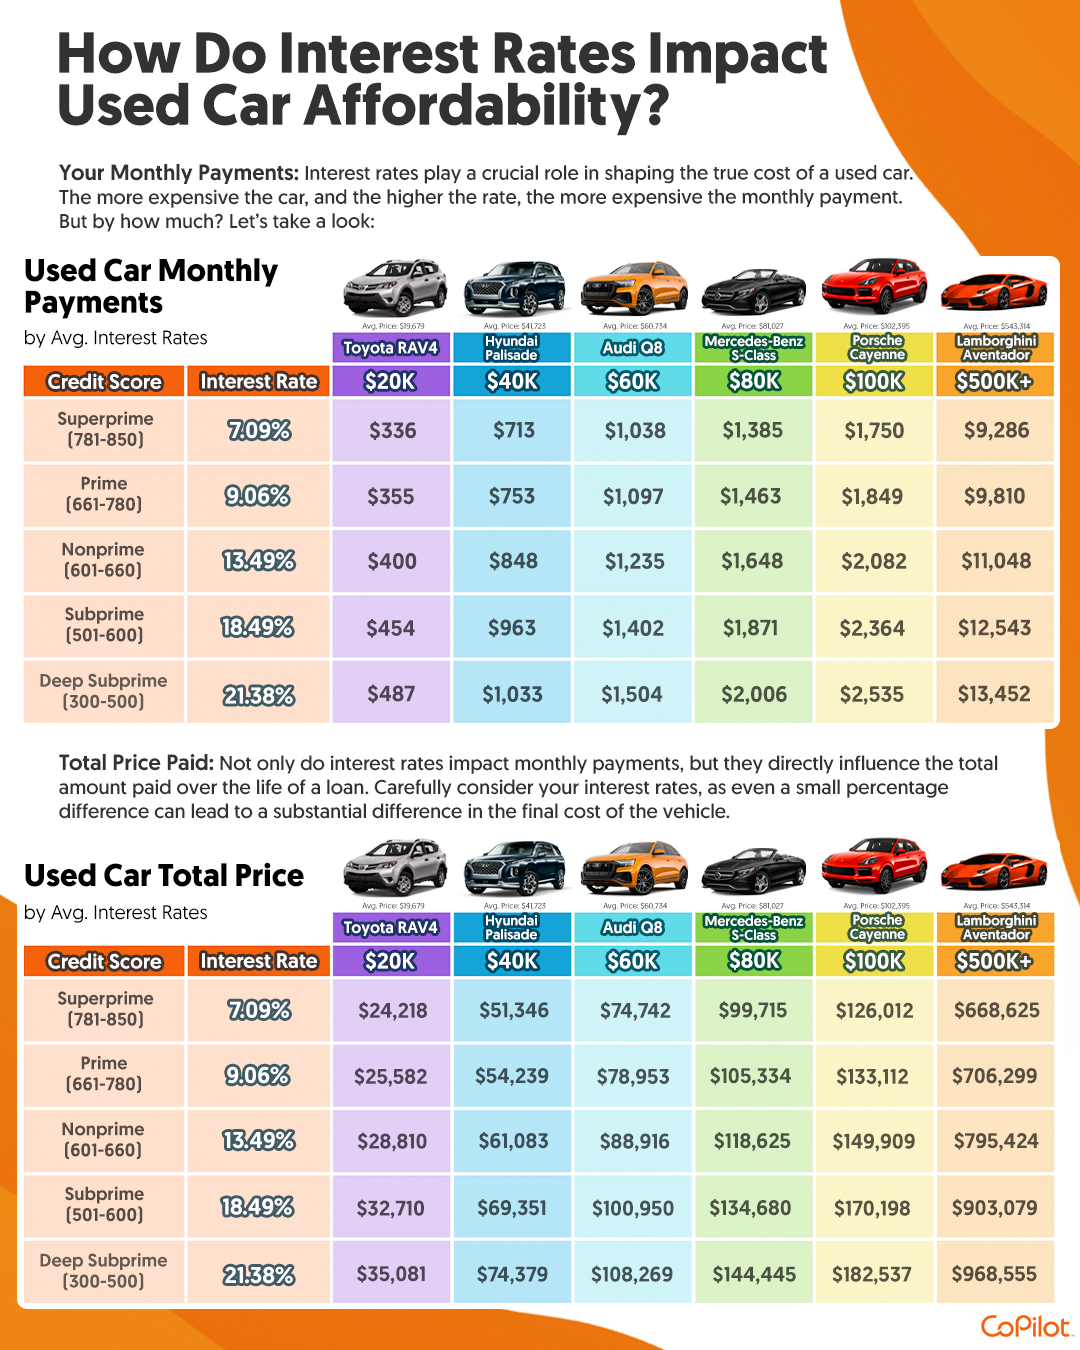 How Do Interest Rates Impact Used Car Affordability? - CoPilot